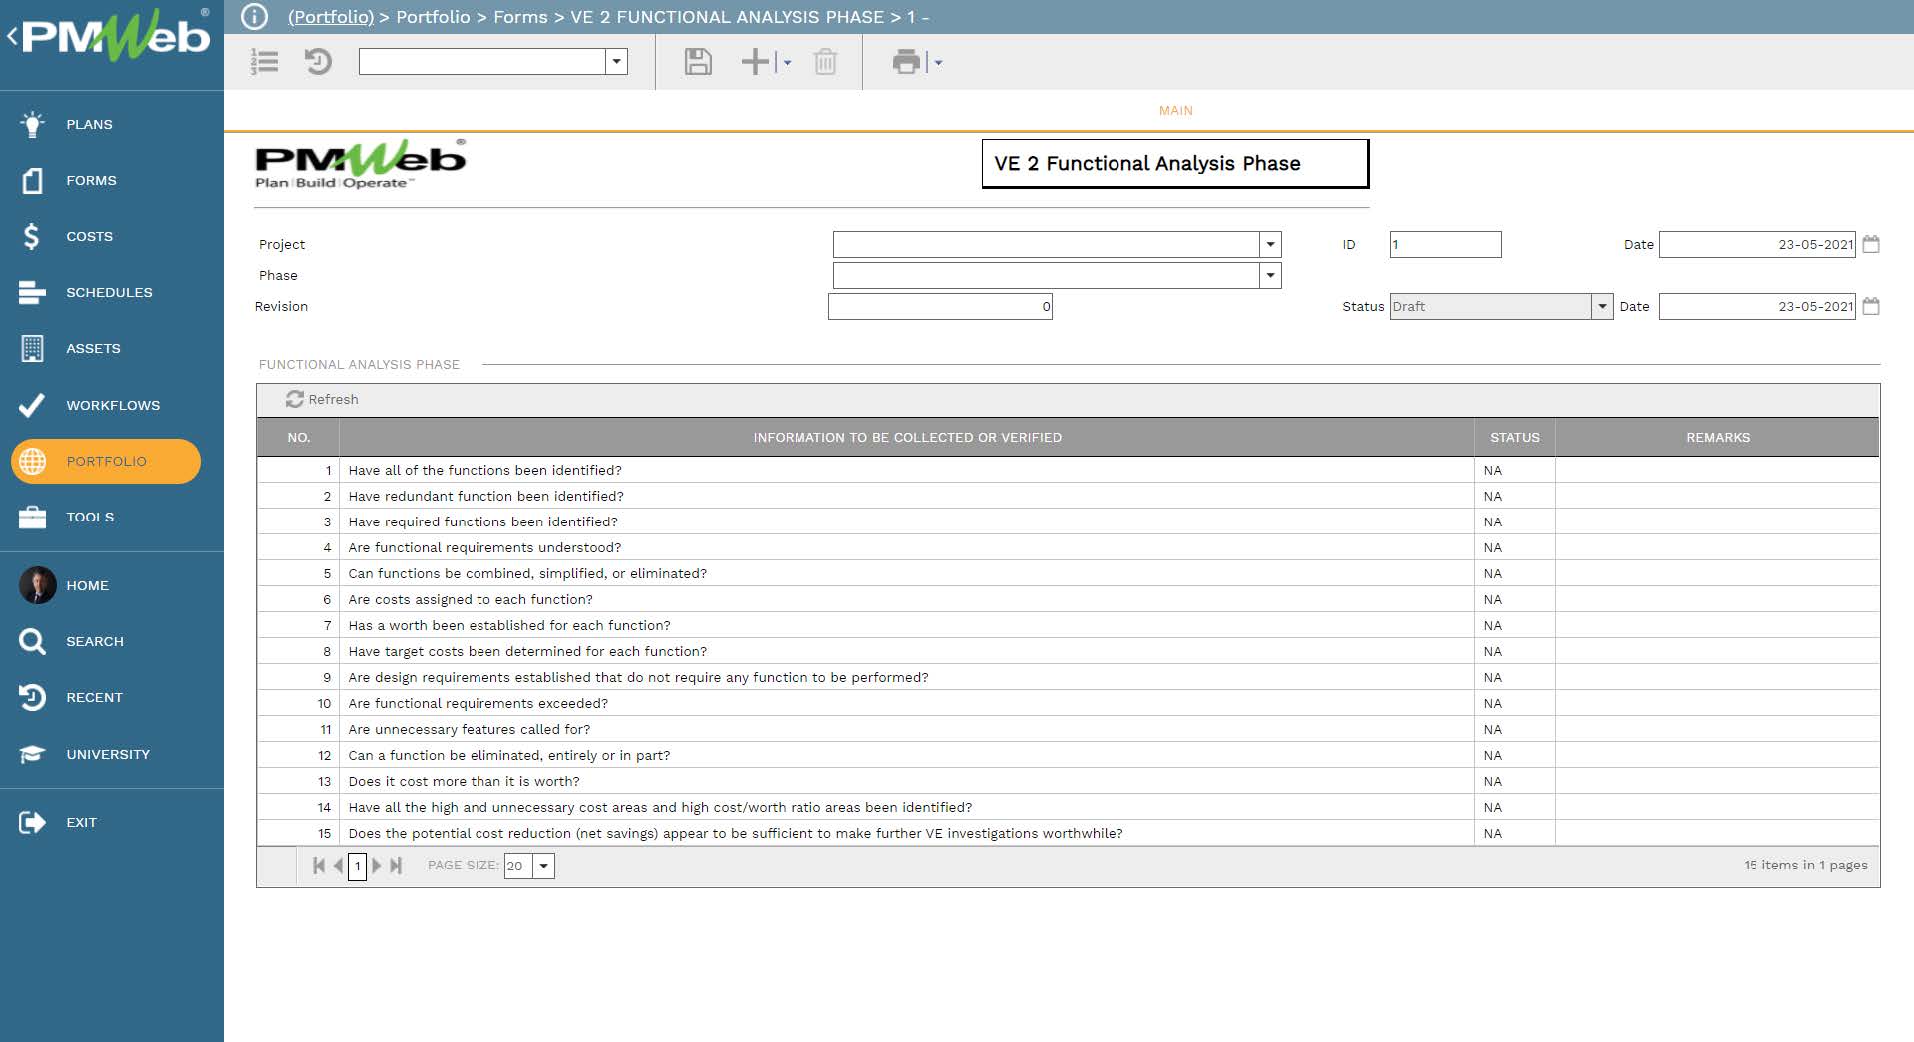 PMWeb 7 Portfolio Forms VE 2 Functional Analysis Phase Main 